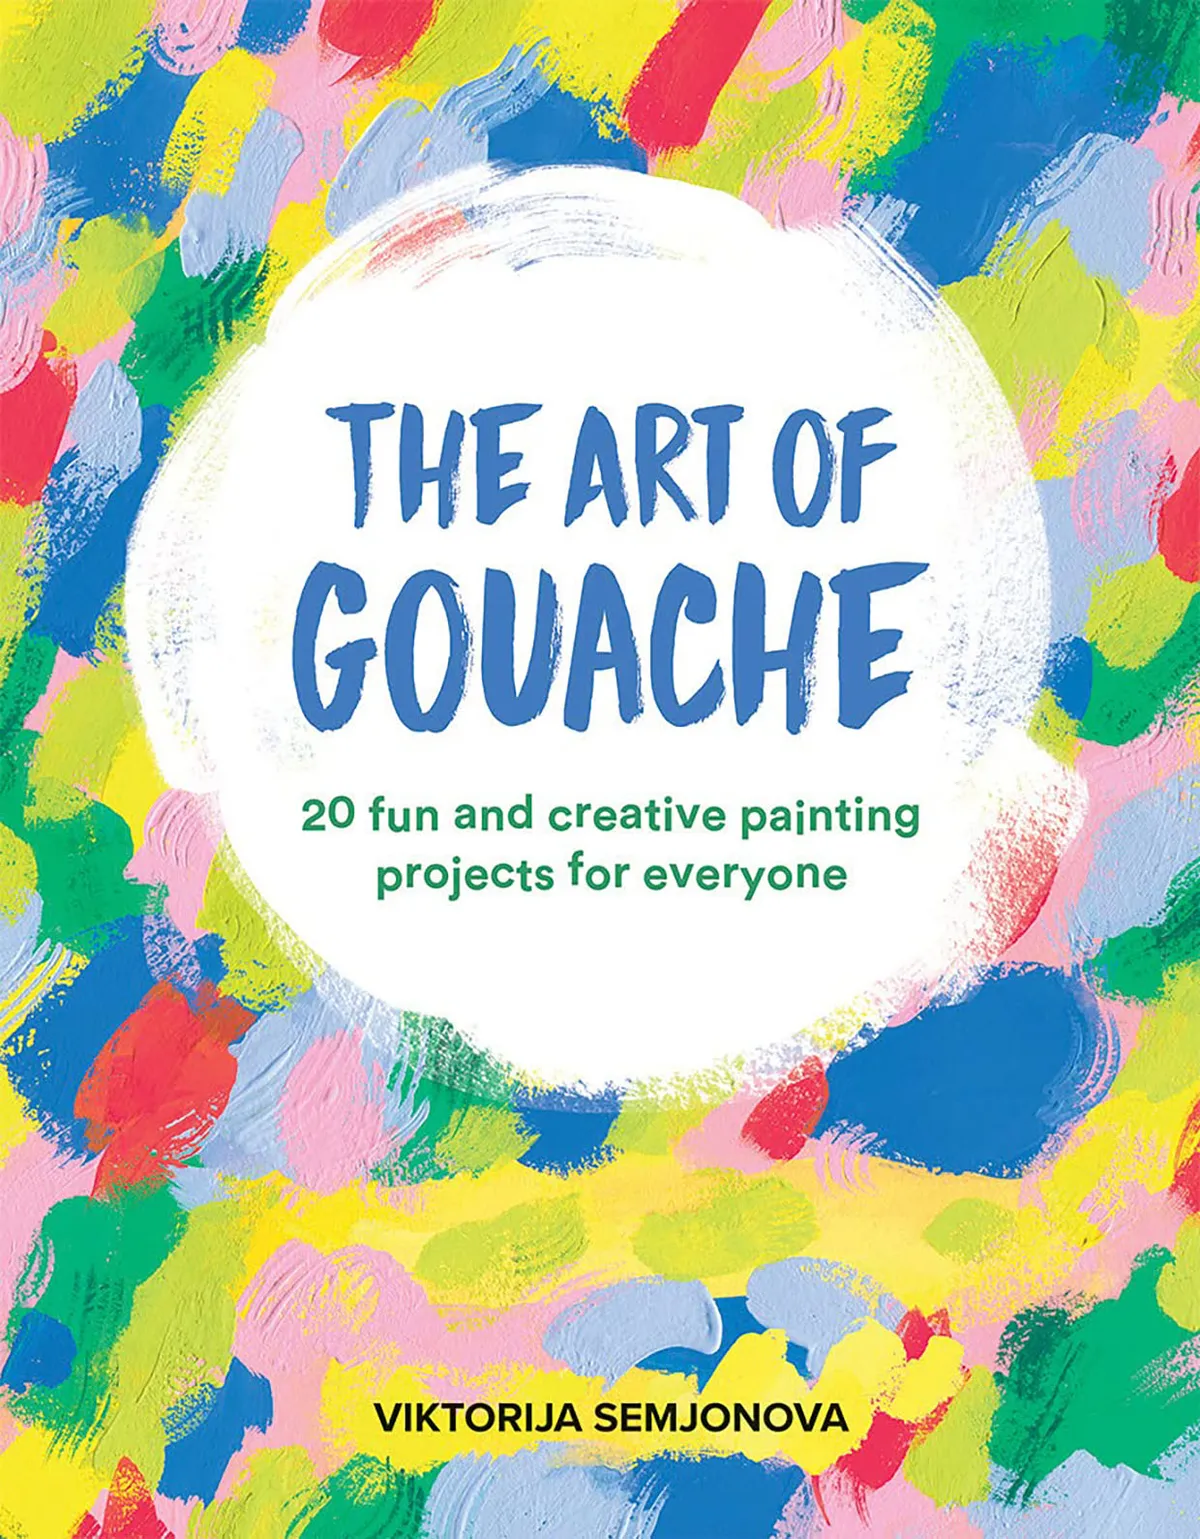 The Art of Gouache by Viktorija Semjonova